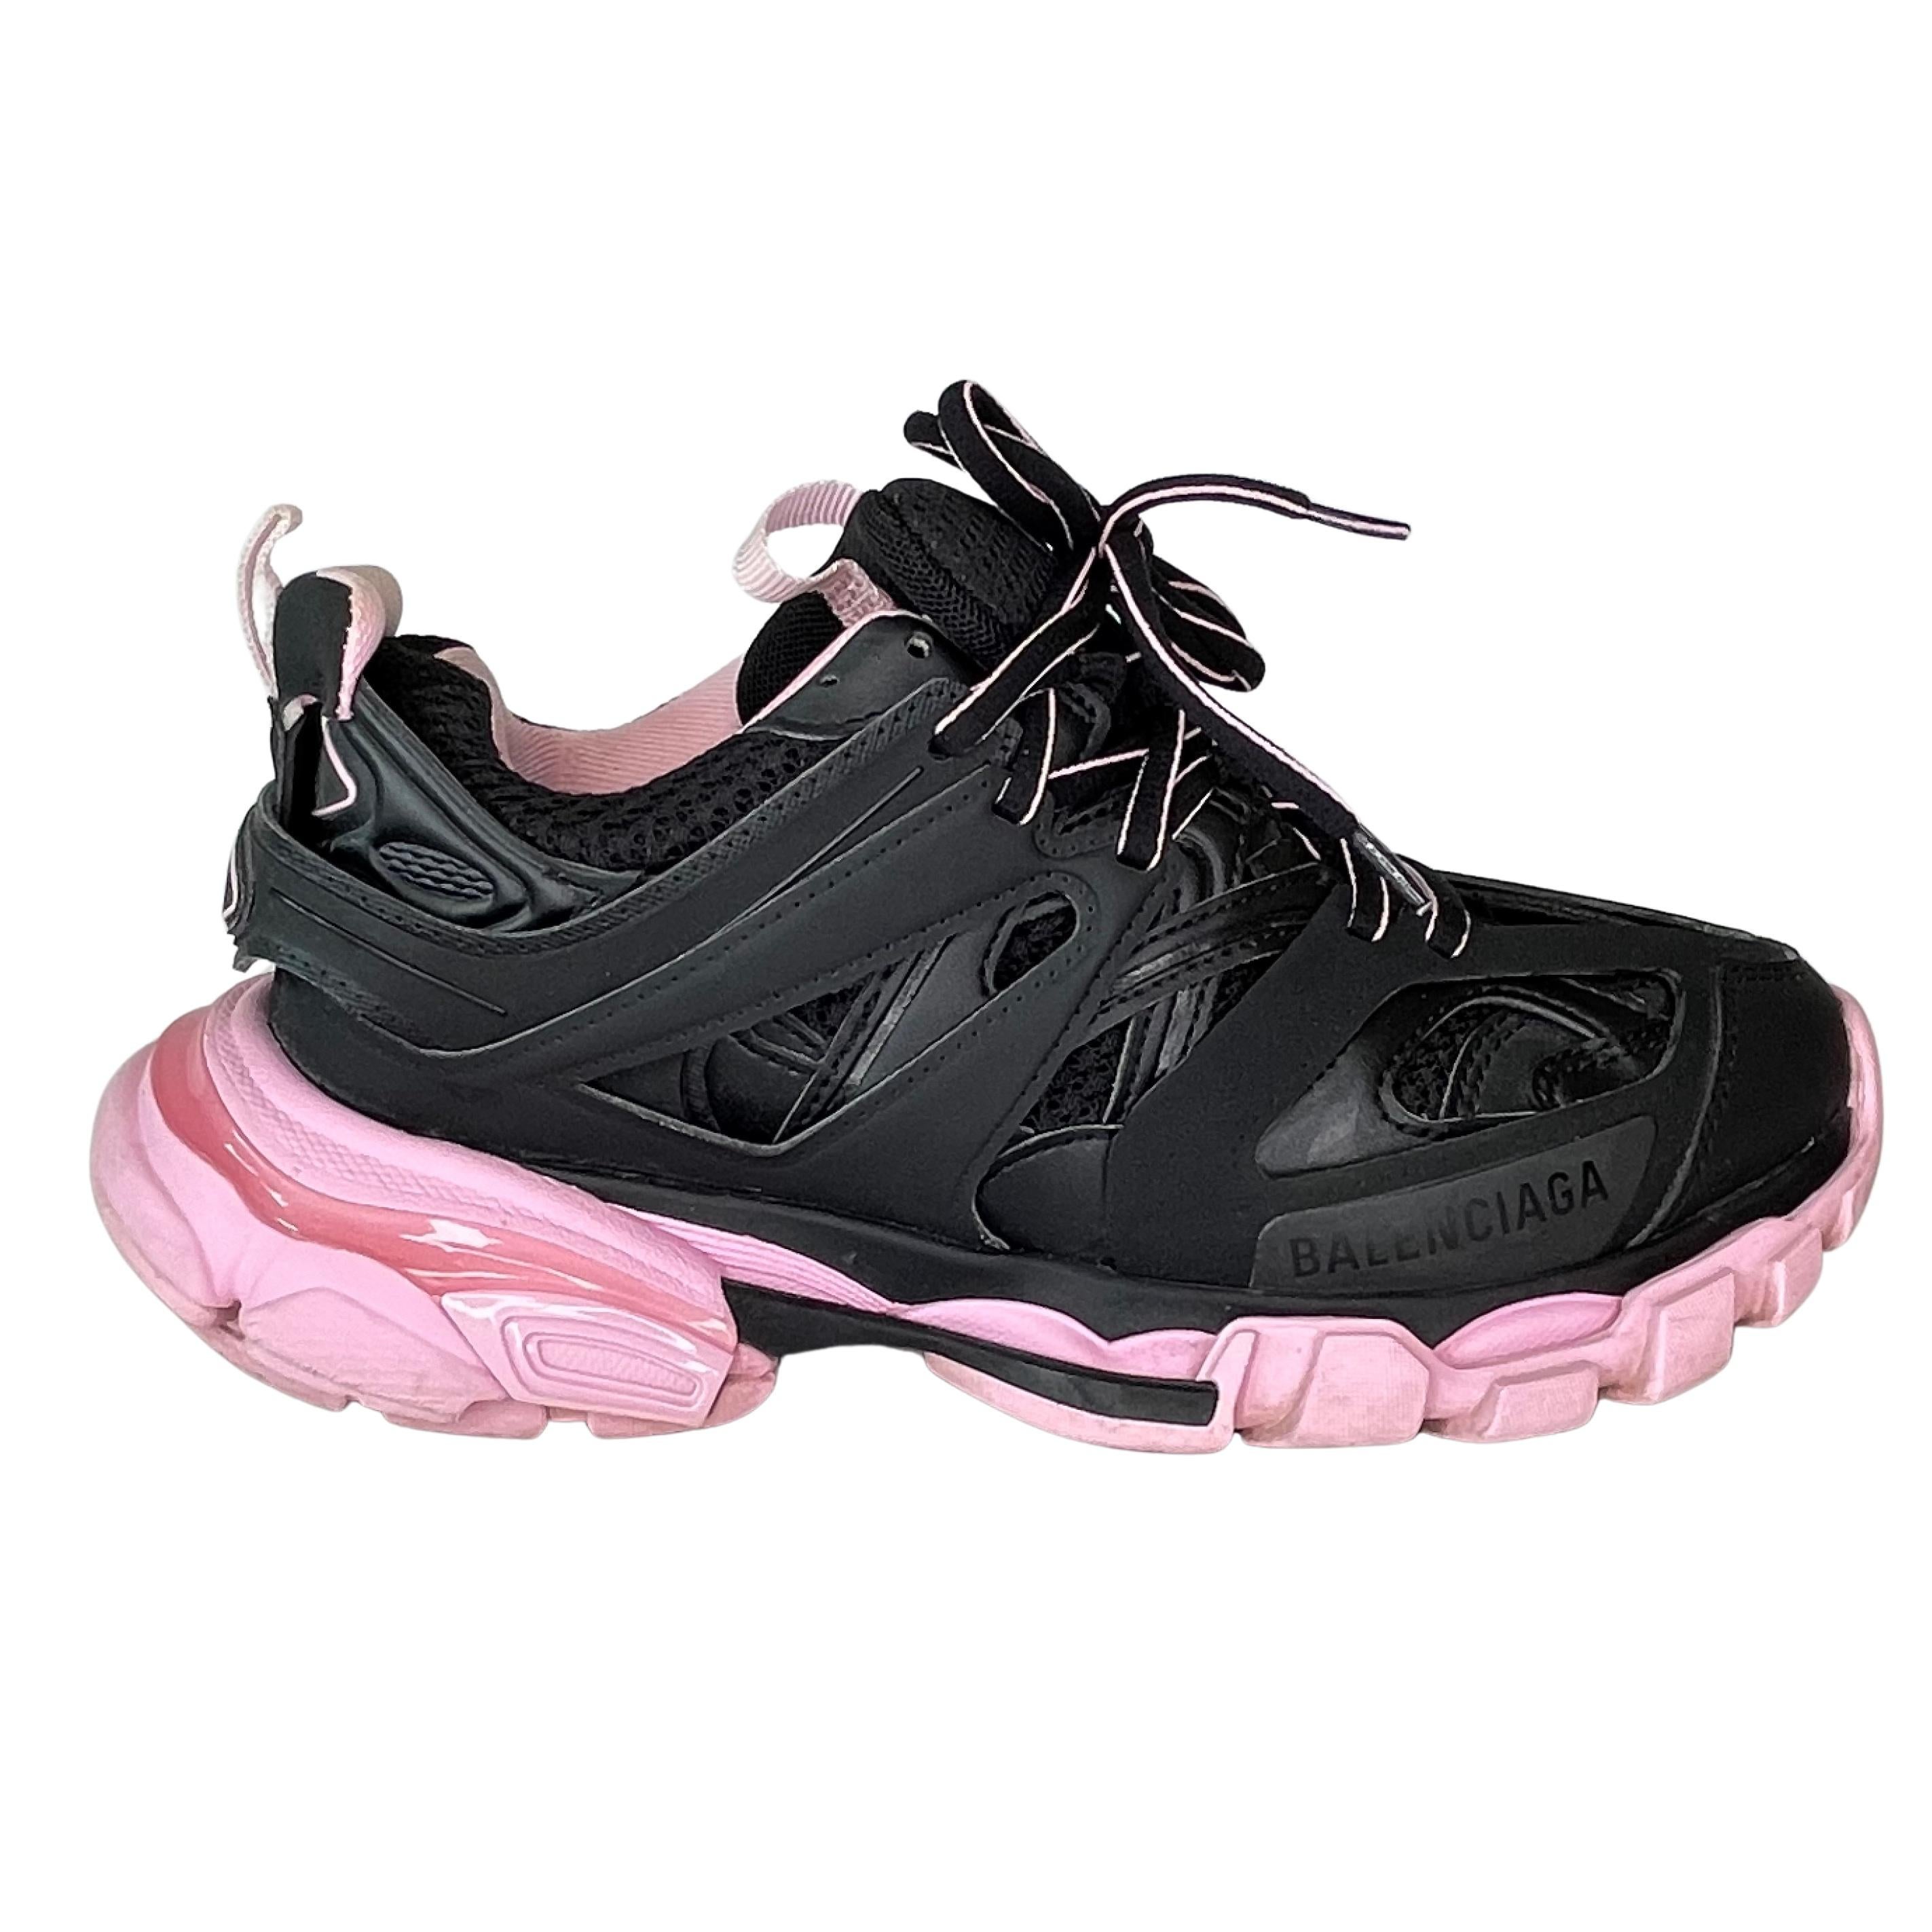 Balenciaga Track Low Top Black/Pink Sneakers (7 US)